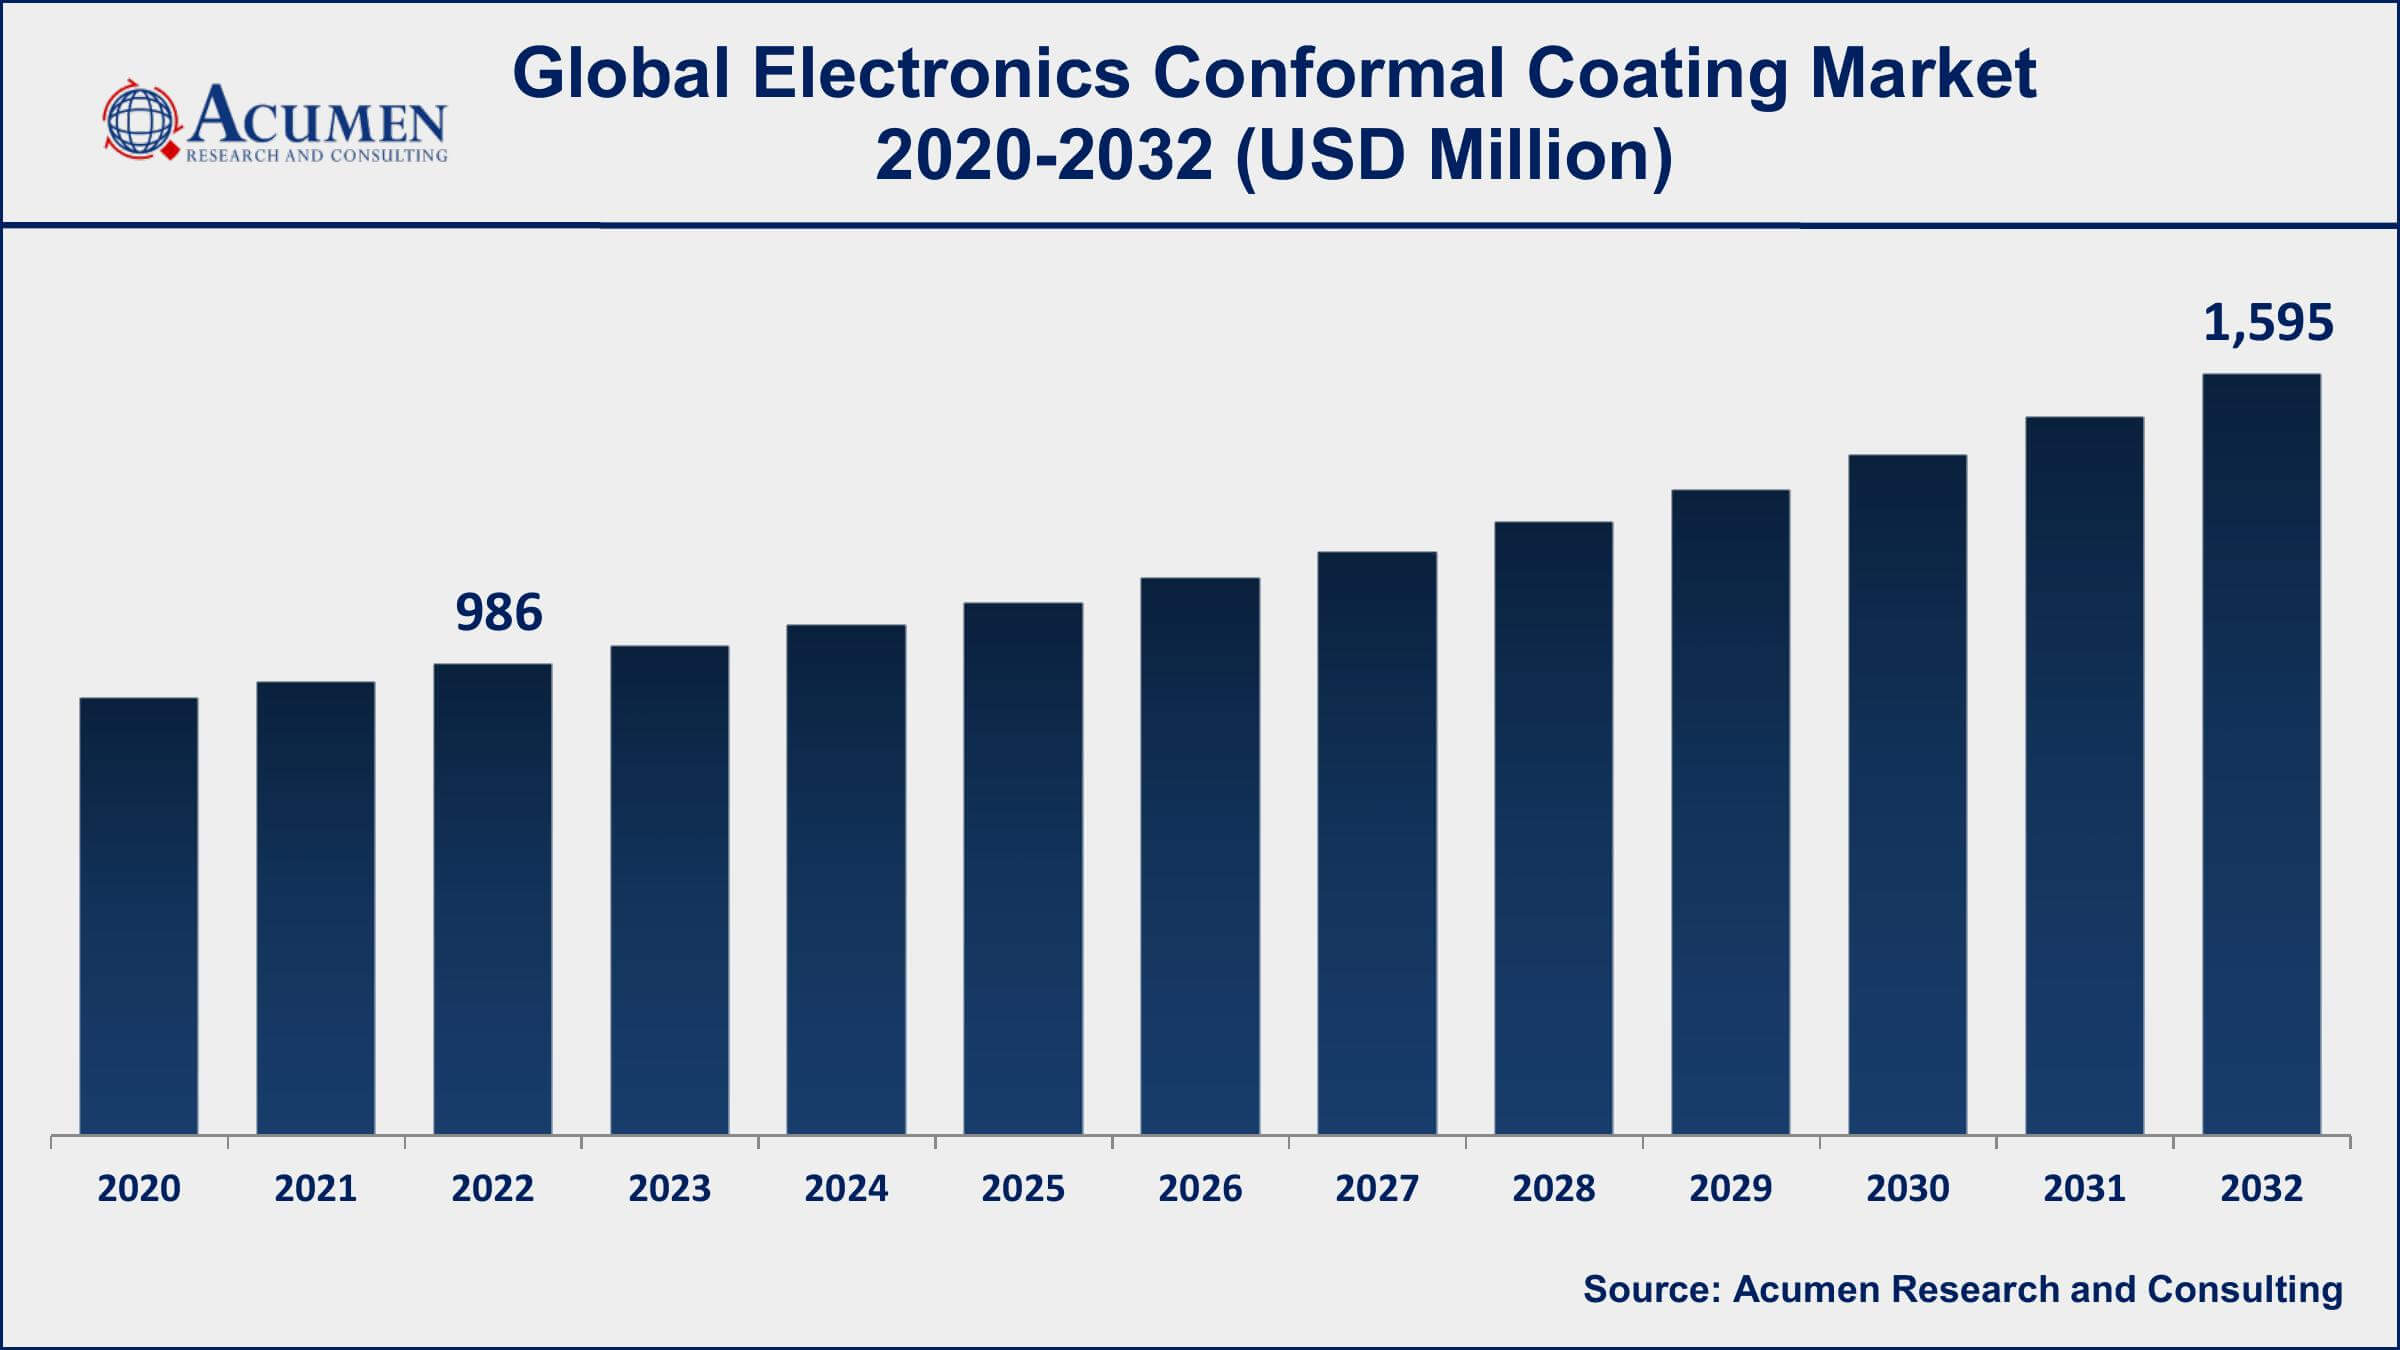 Electronics Conformal Coating Market Dynamics